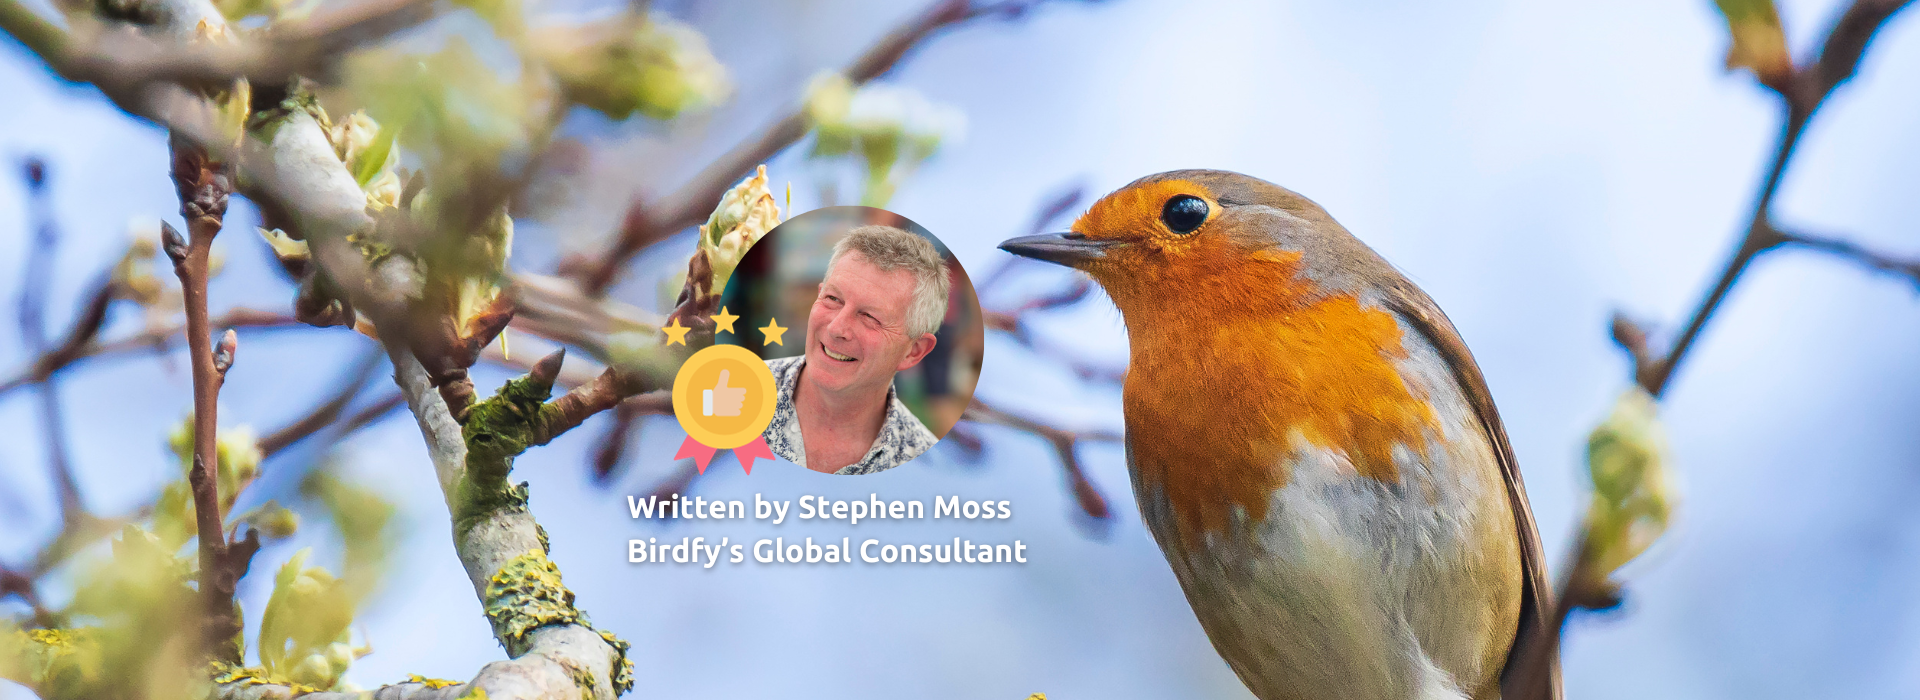 Stephen Moss: The Surprising Stories Behind Bird Names